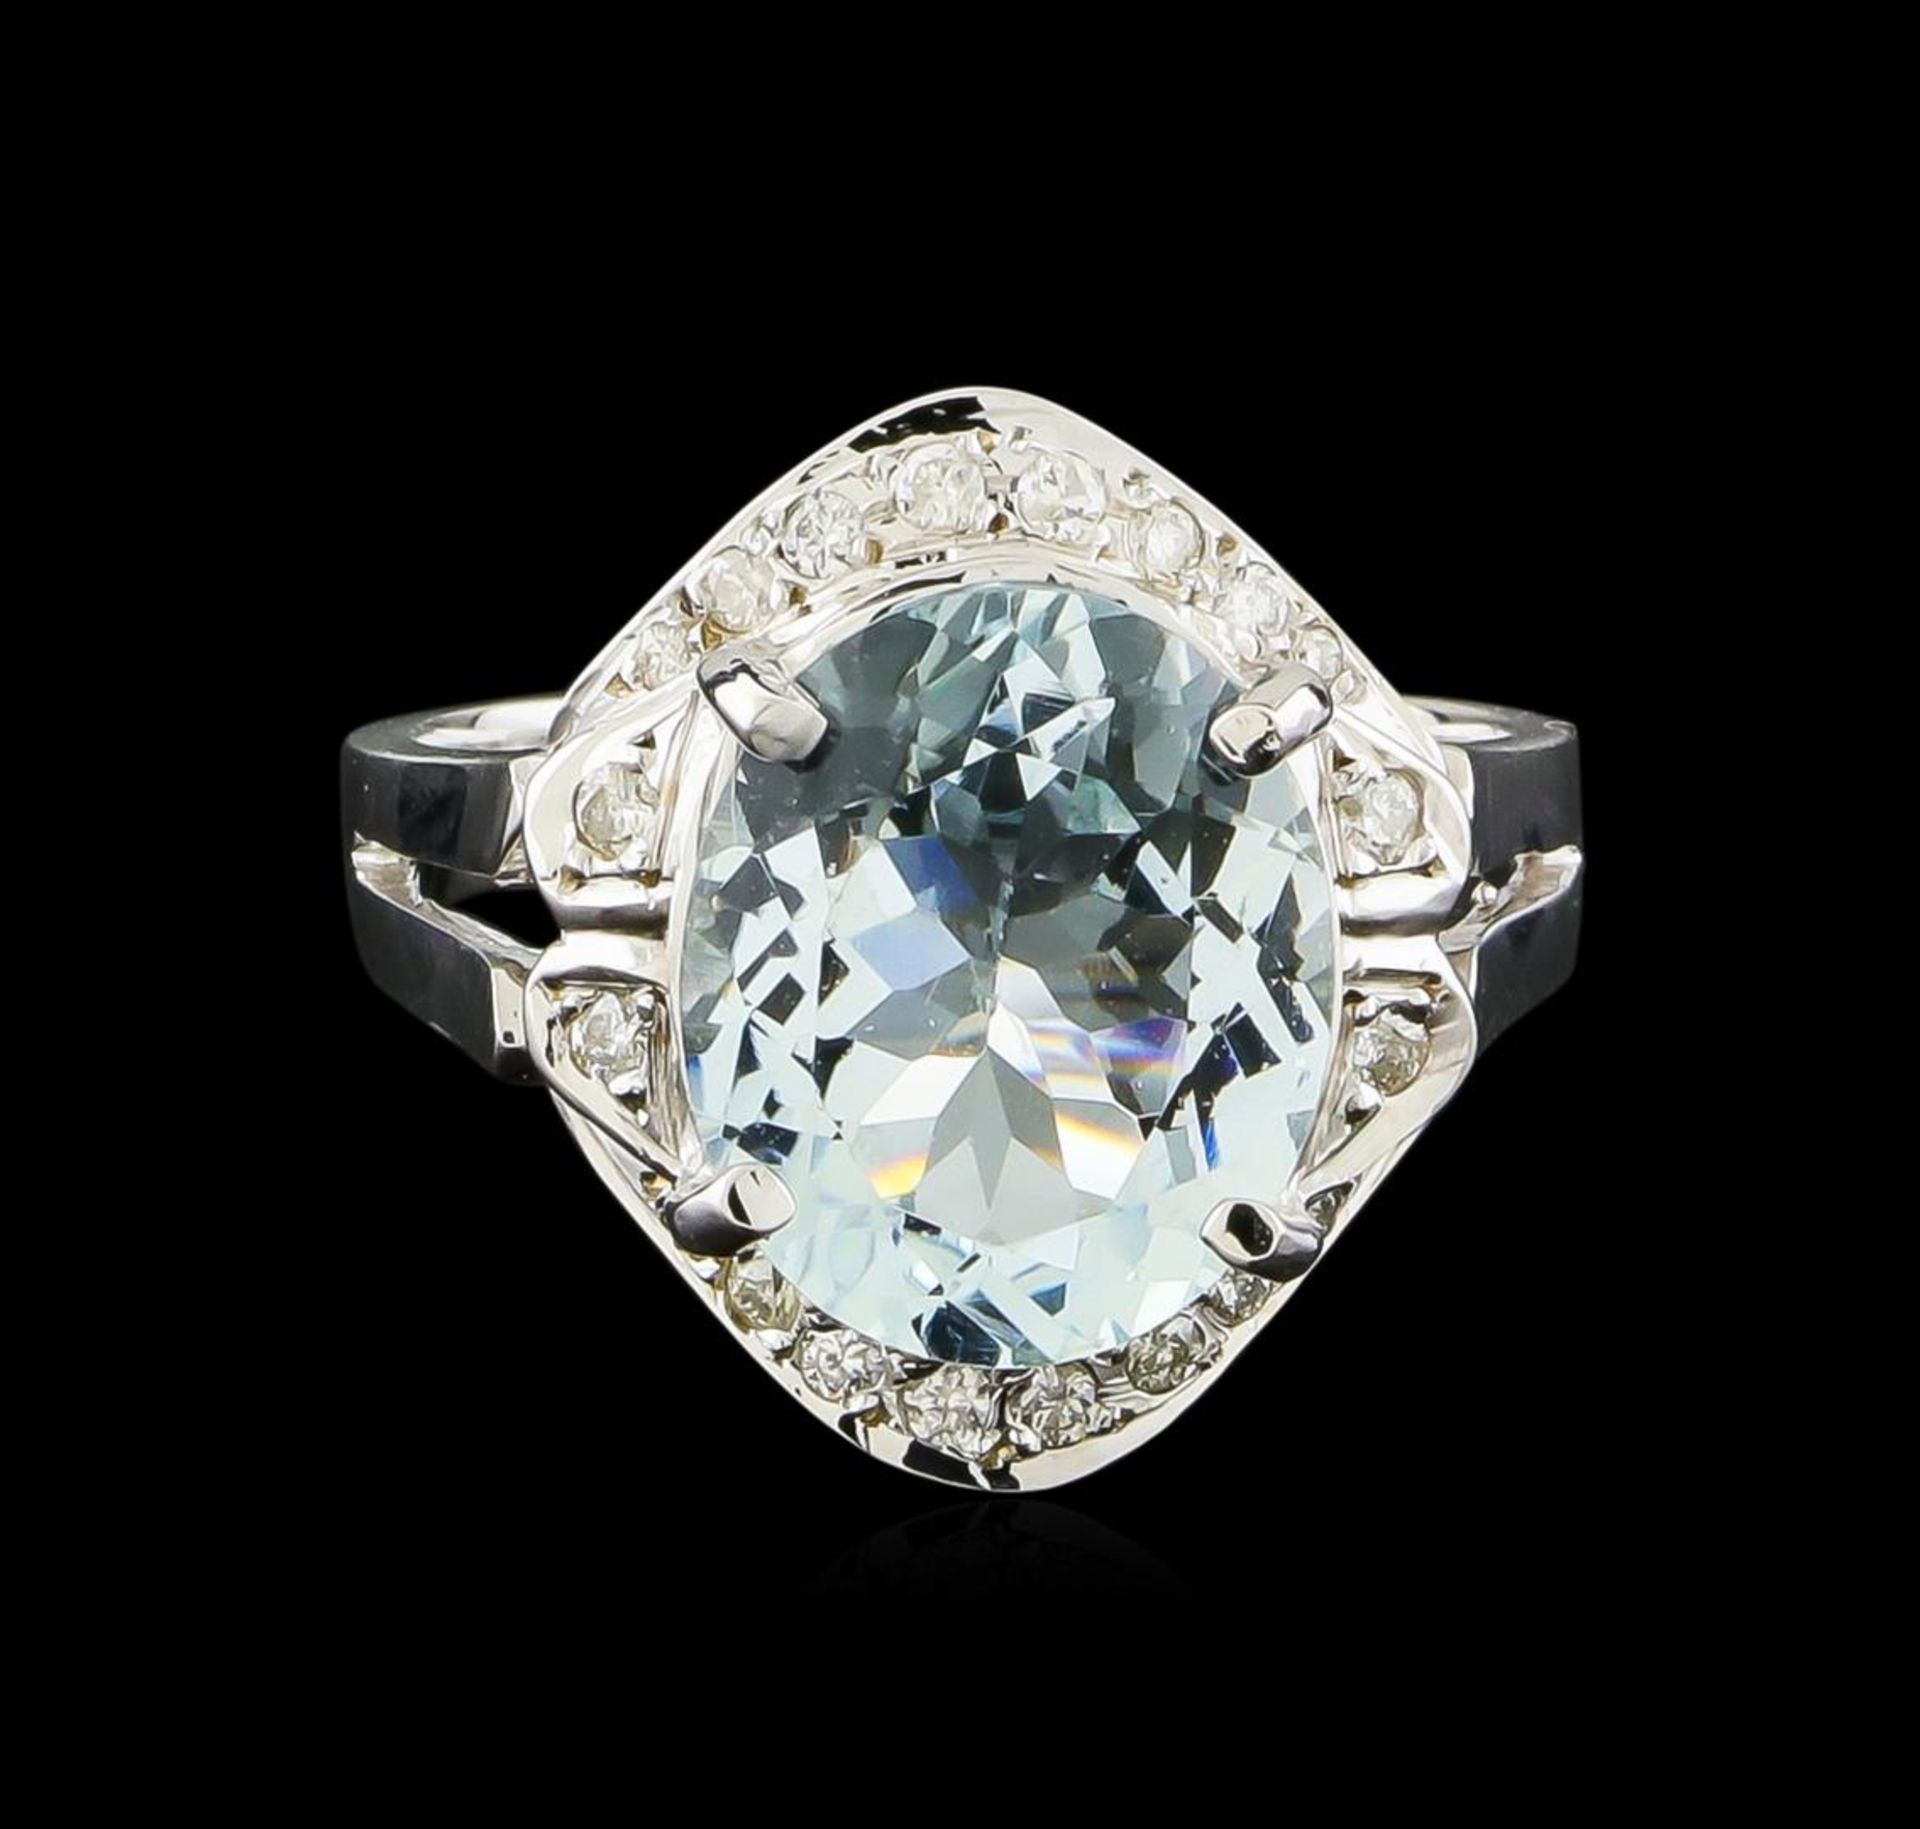 3.85 ctw Aquamarine and Diamond Ring - 14KT White Gold - Image 2 of 4